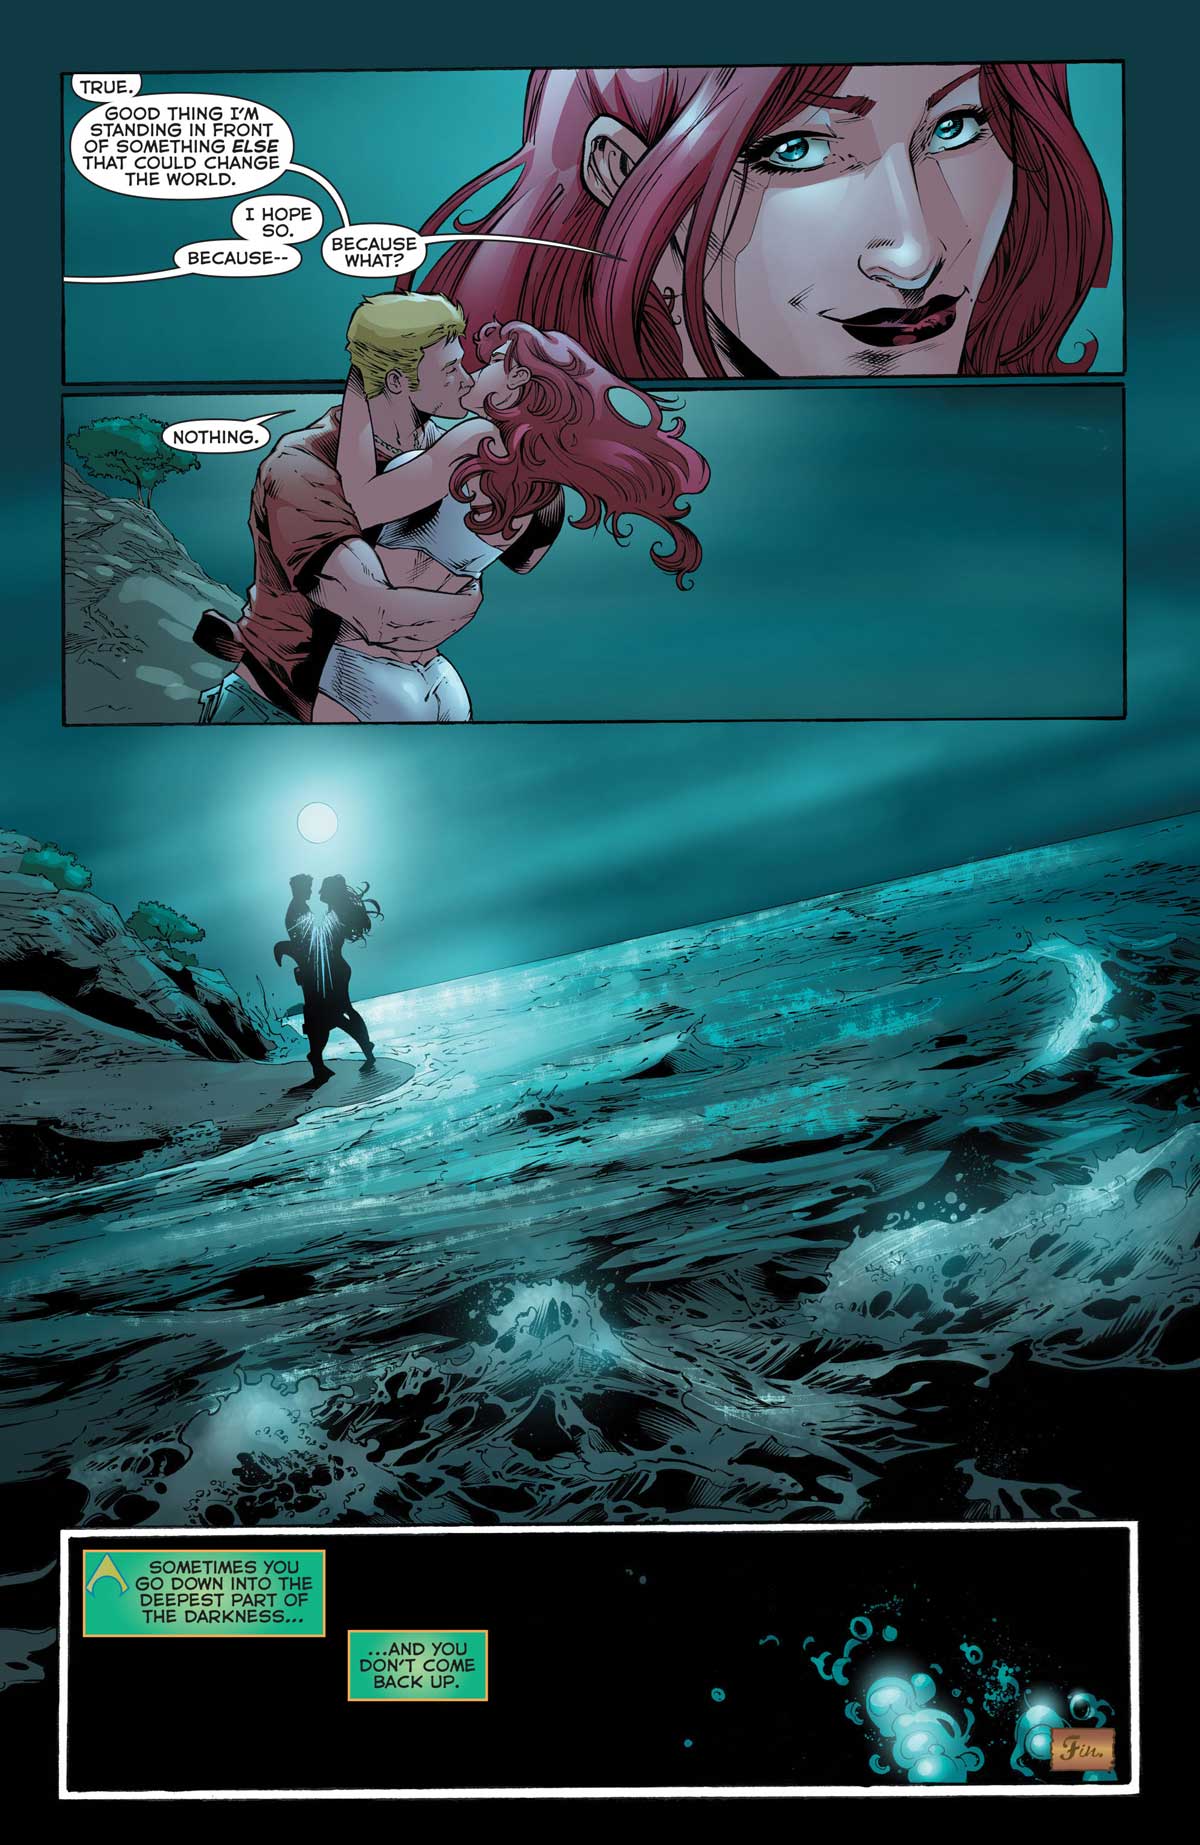 Aquaman #52 by Dan Abnett, Vicente Cifuentes and Juan Castro